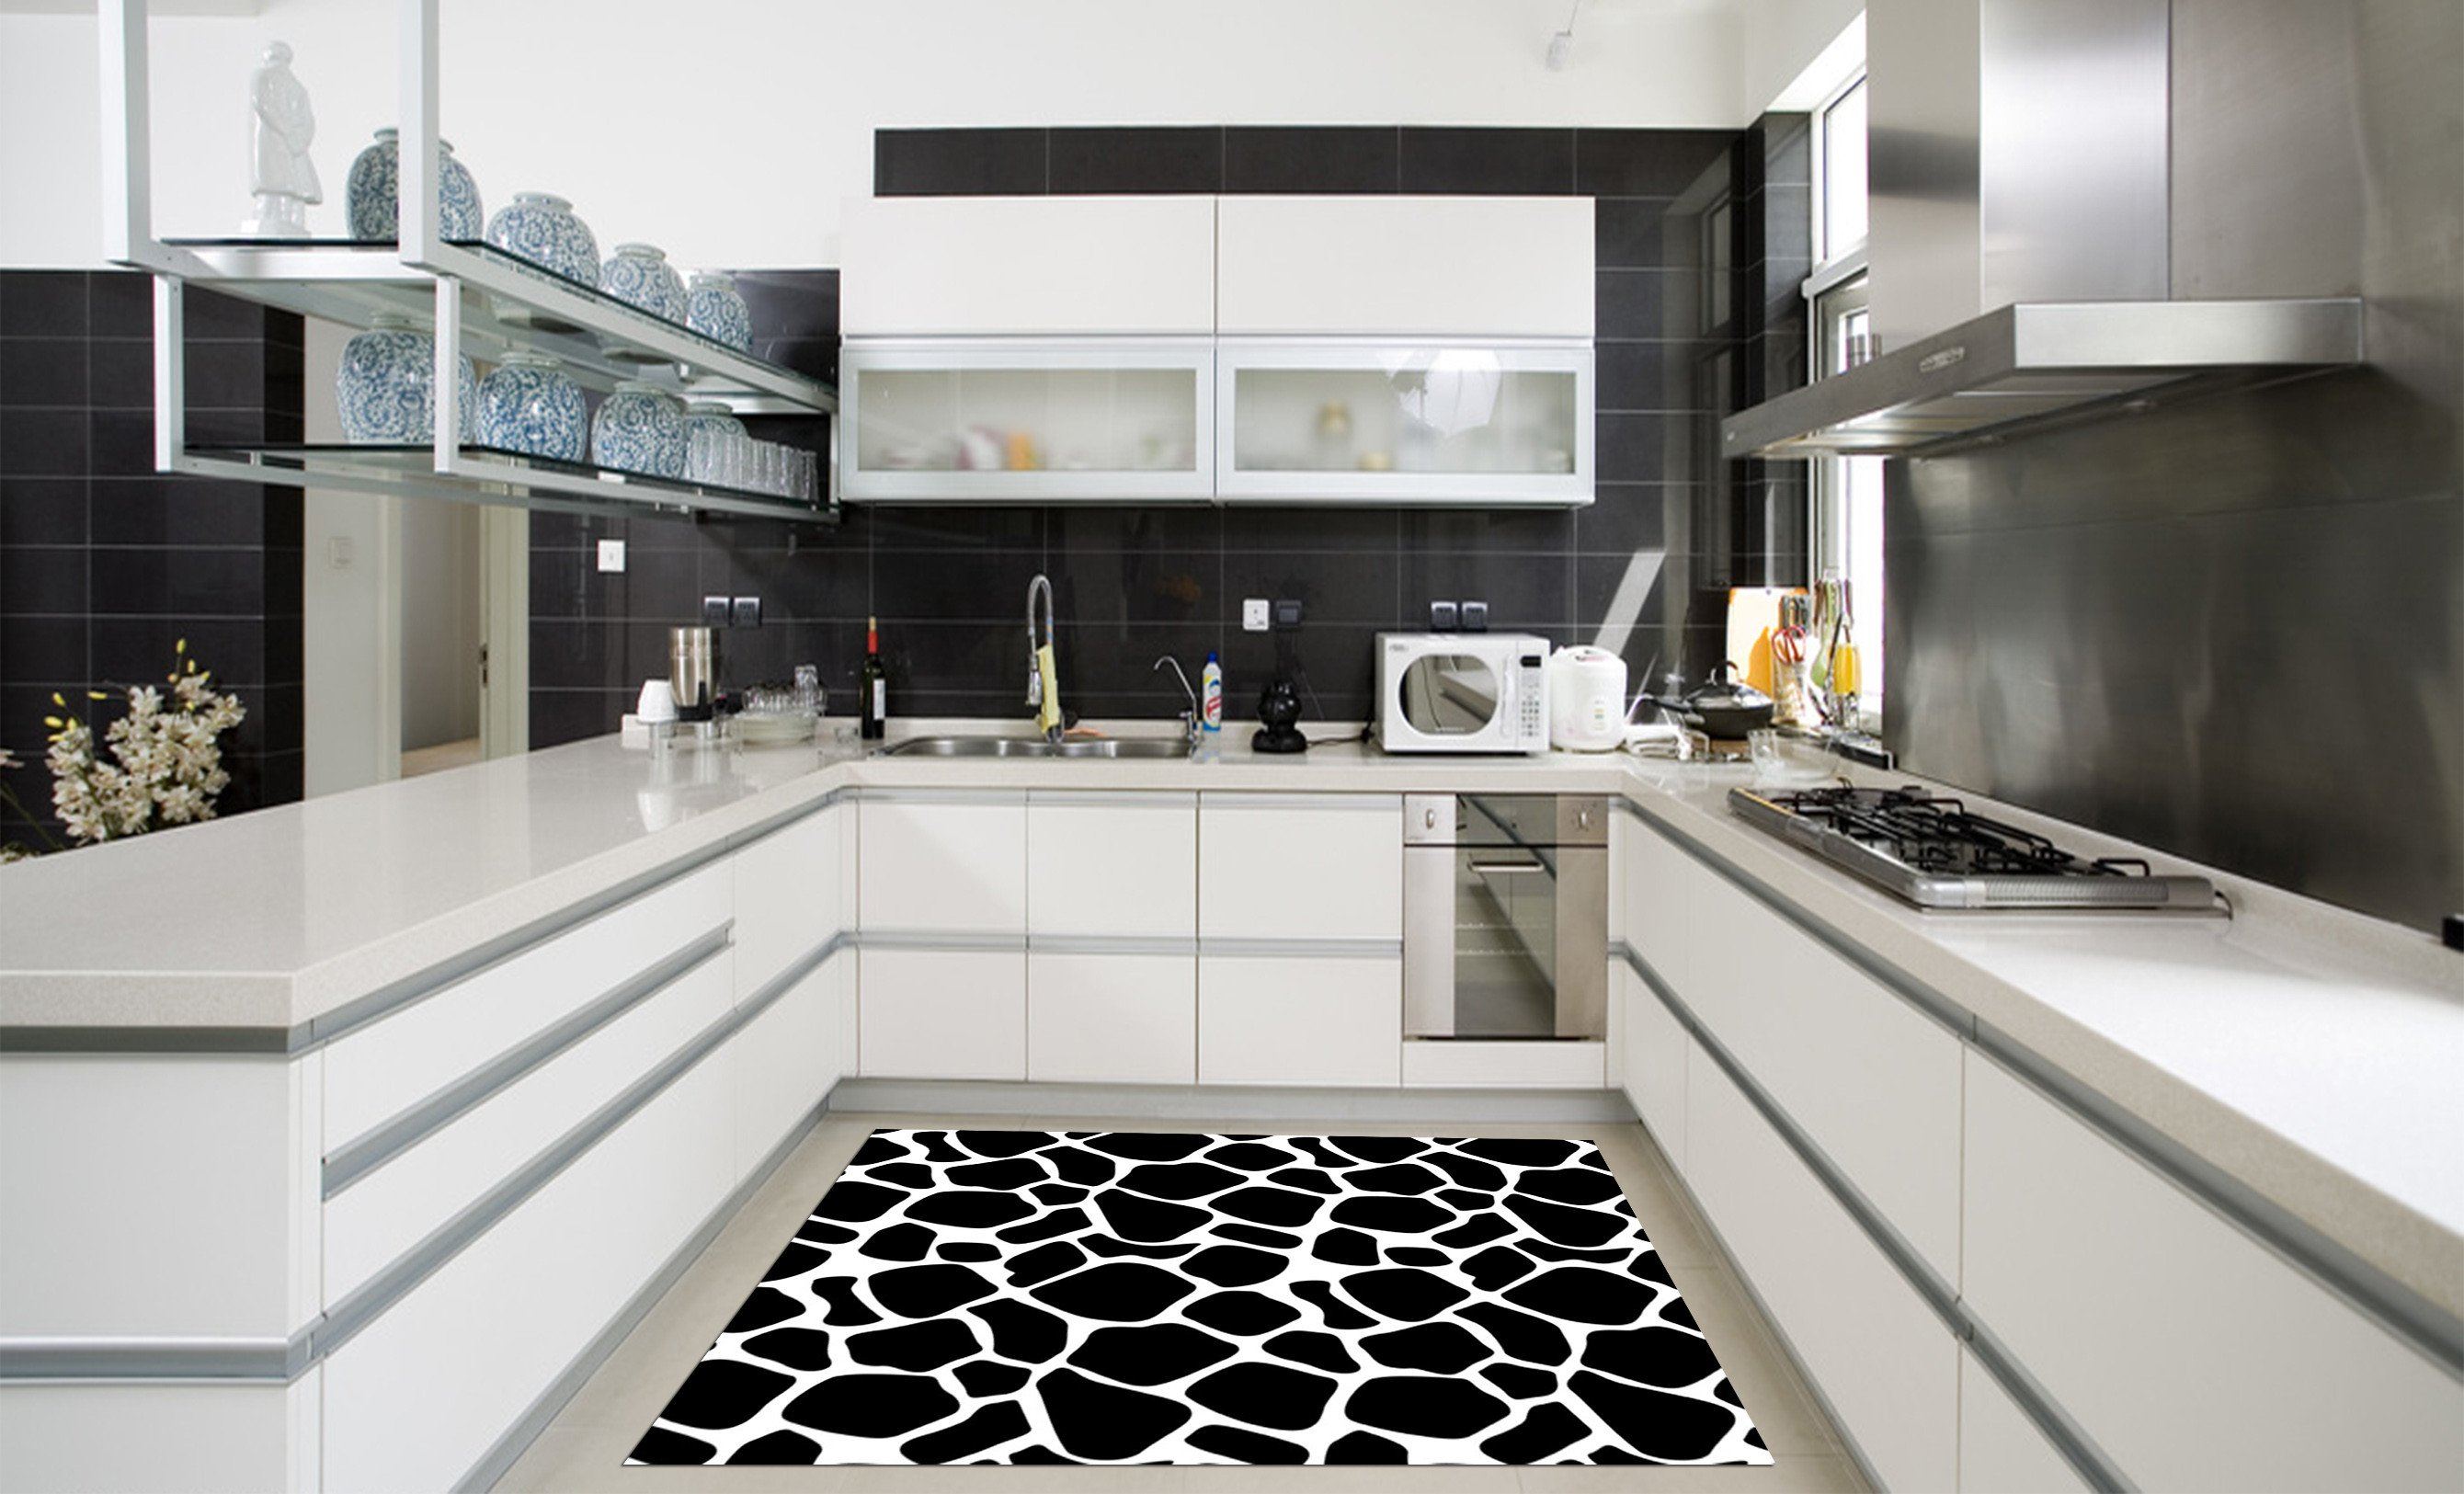 3D Black Spots 696 Kitchen Mat Floor Mural Wallpaper AJ Wallpaper 